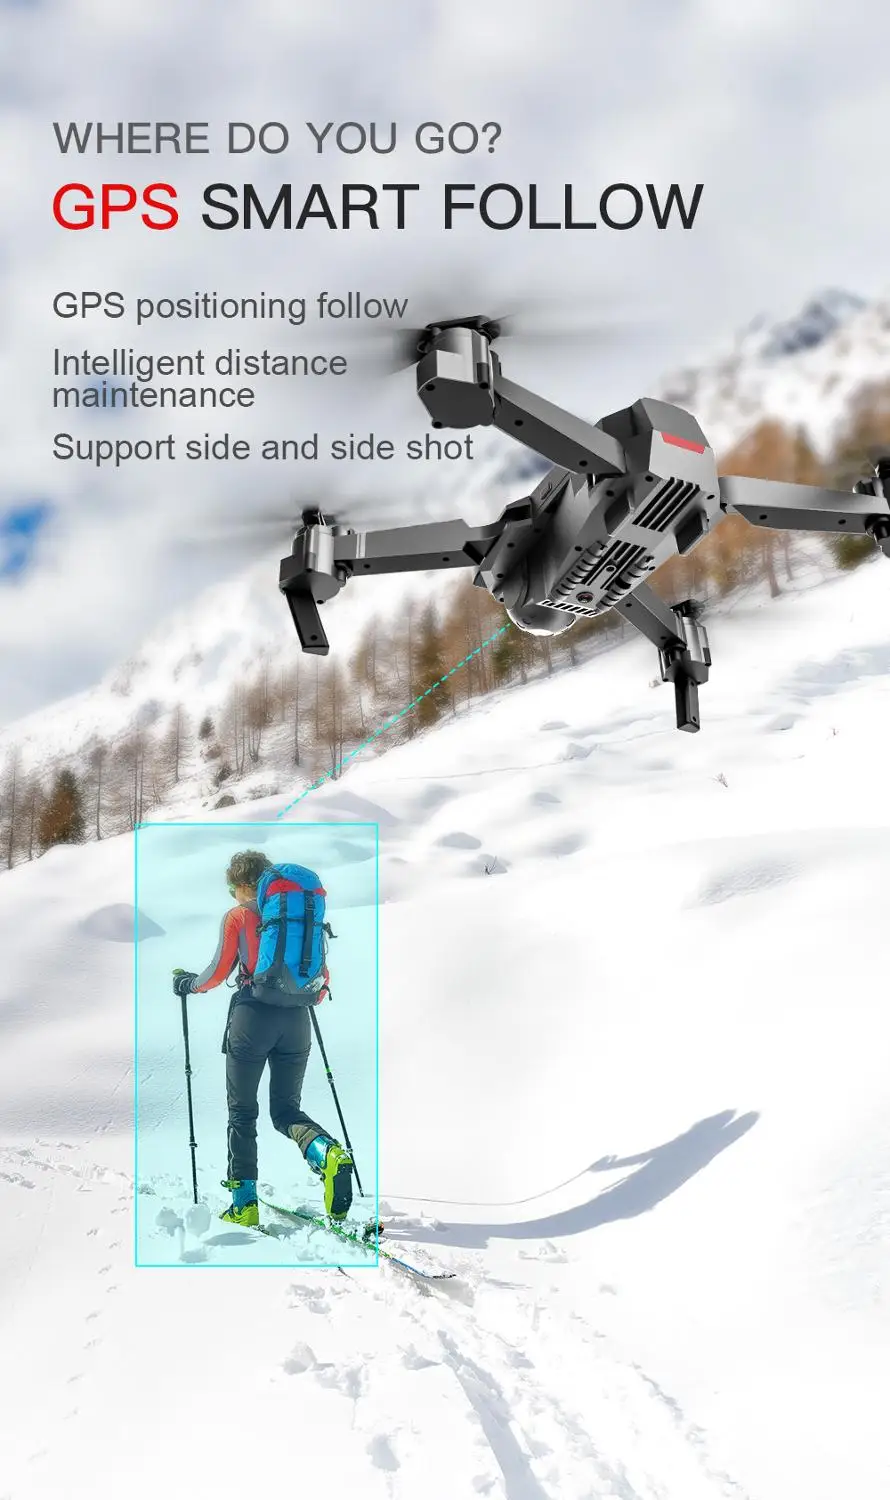 SG907 5G GPS Drone 4K selfie profesinės Quadrocopter su Kamera HD Nuotolinio Valdymo Mini Sraigtasparnis tranai dron VS e520s